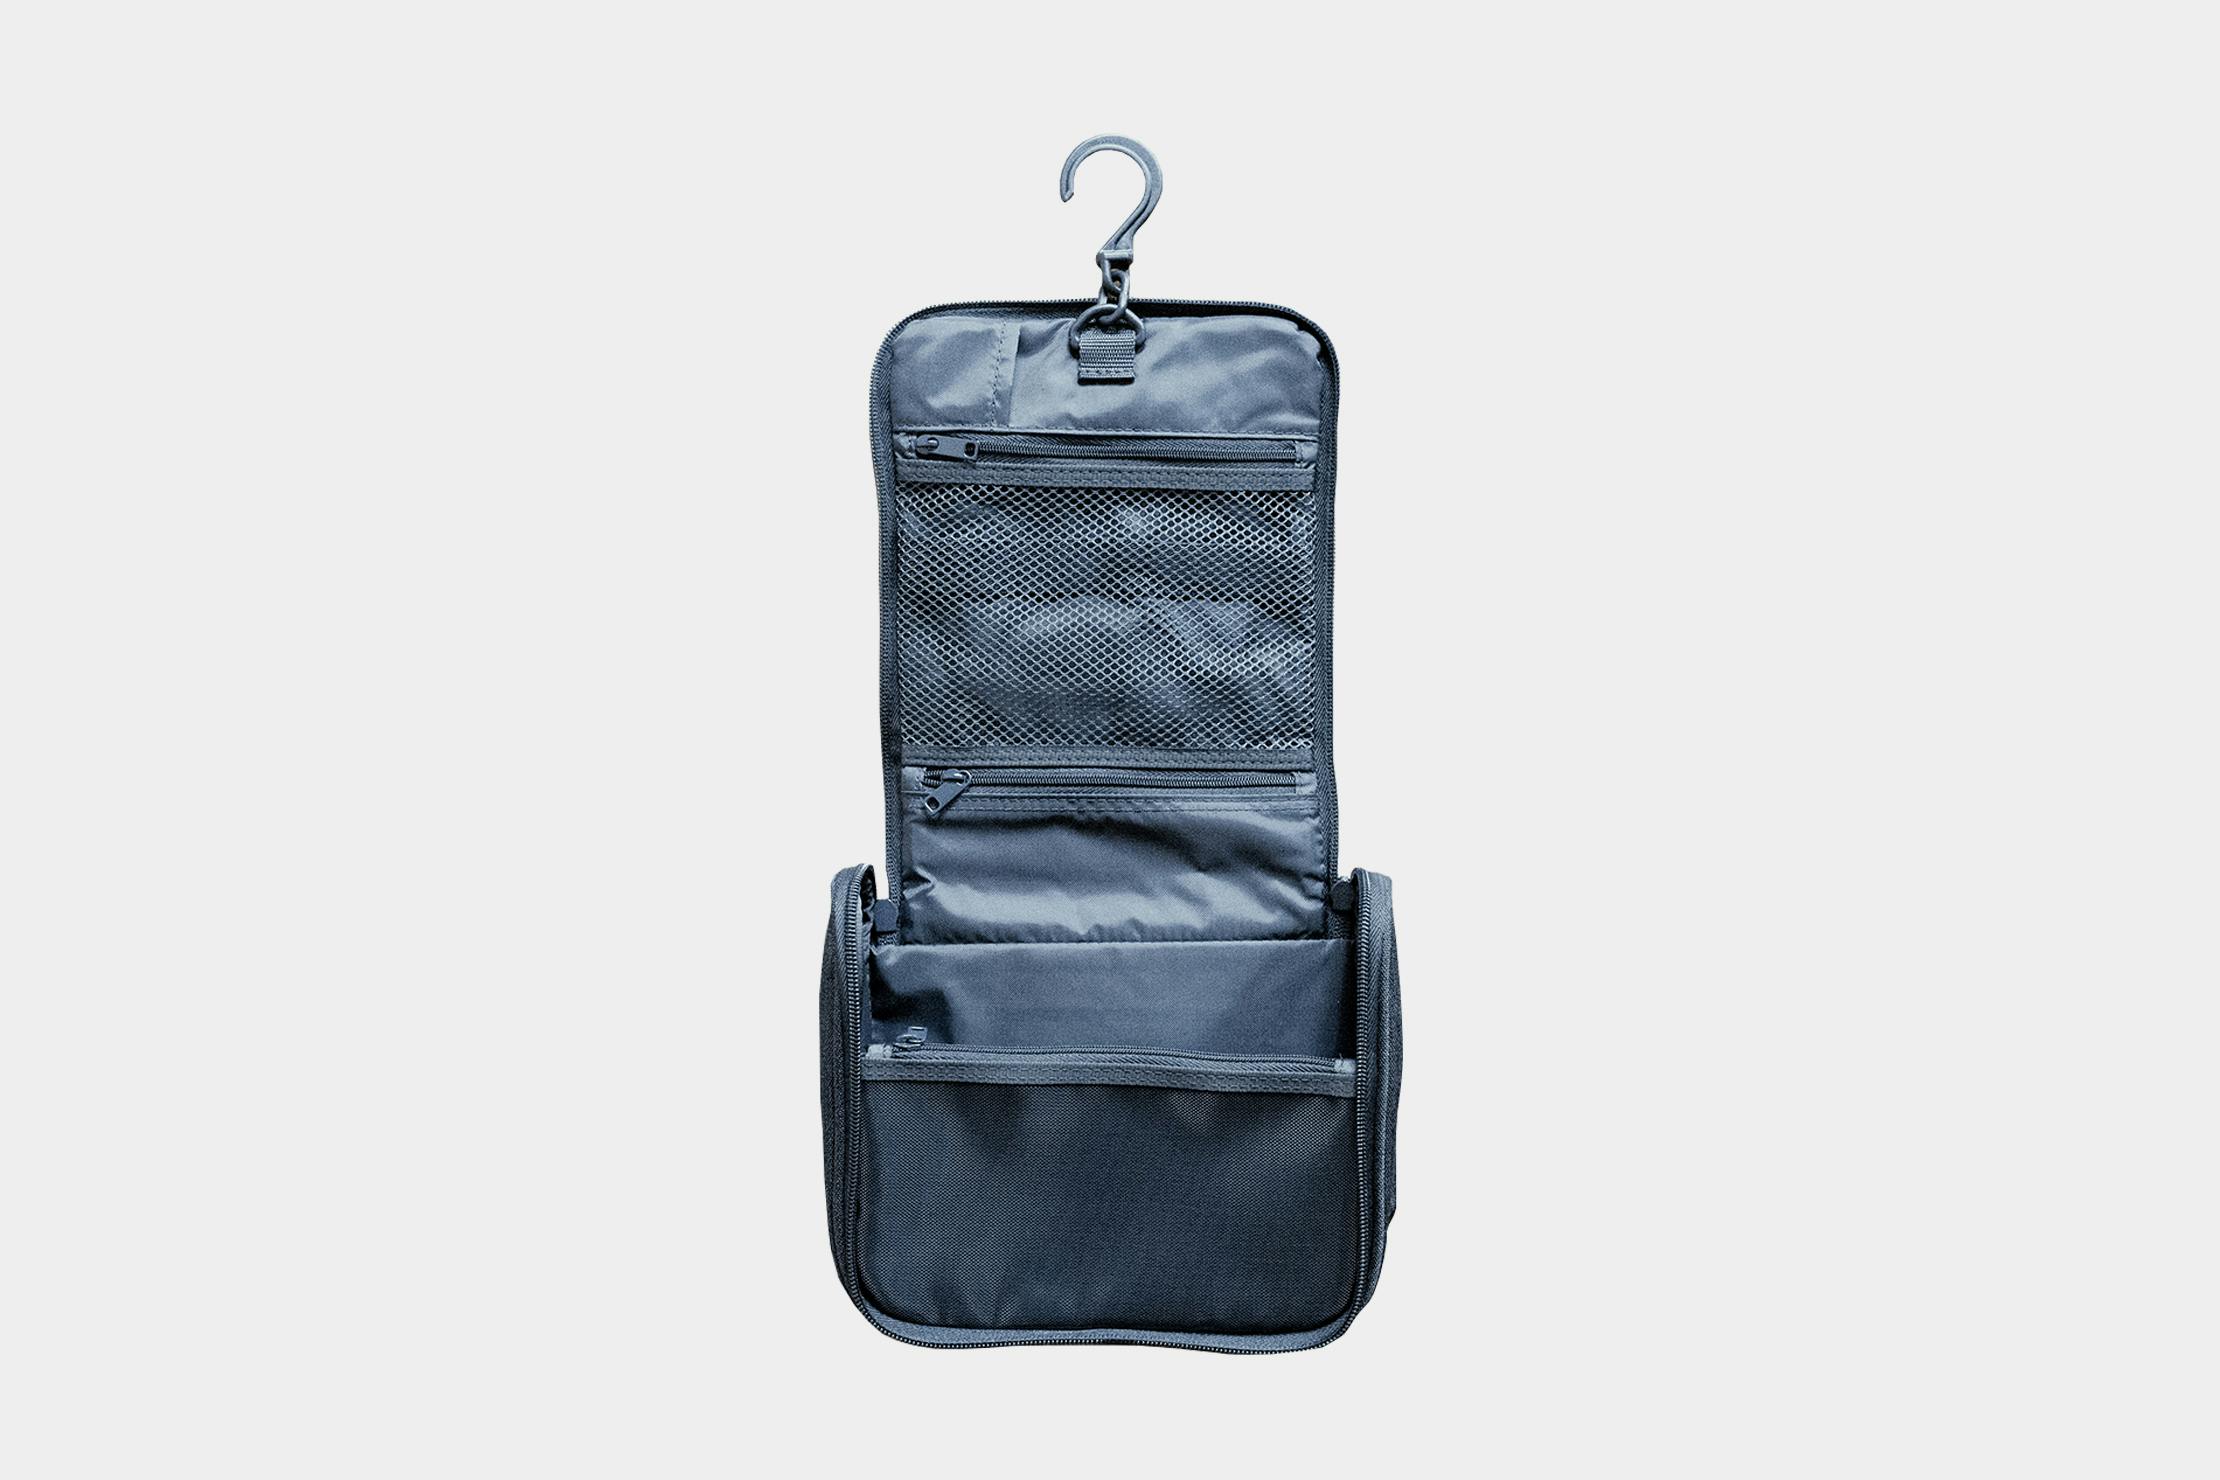 muji travel bag organizer